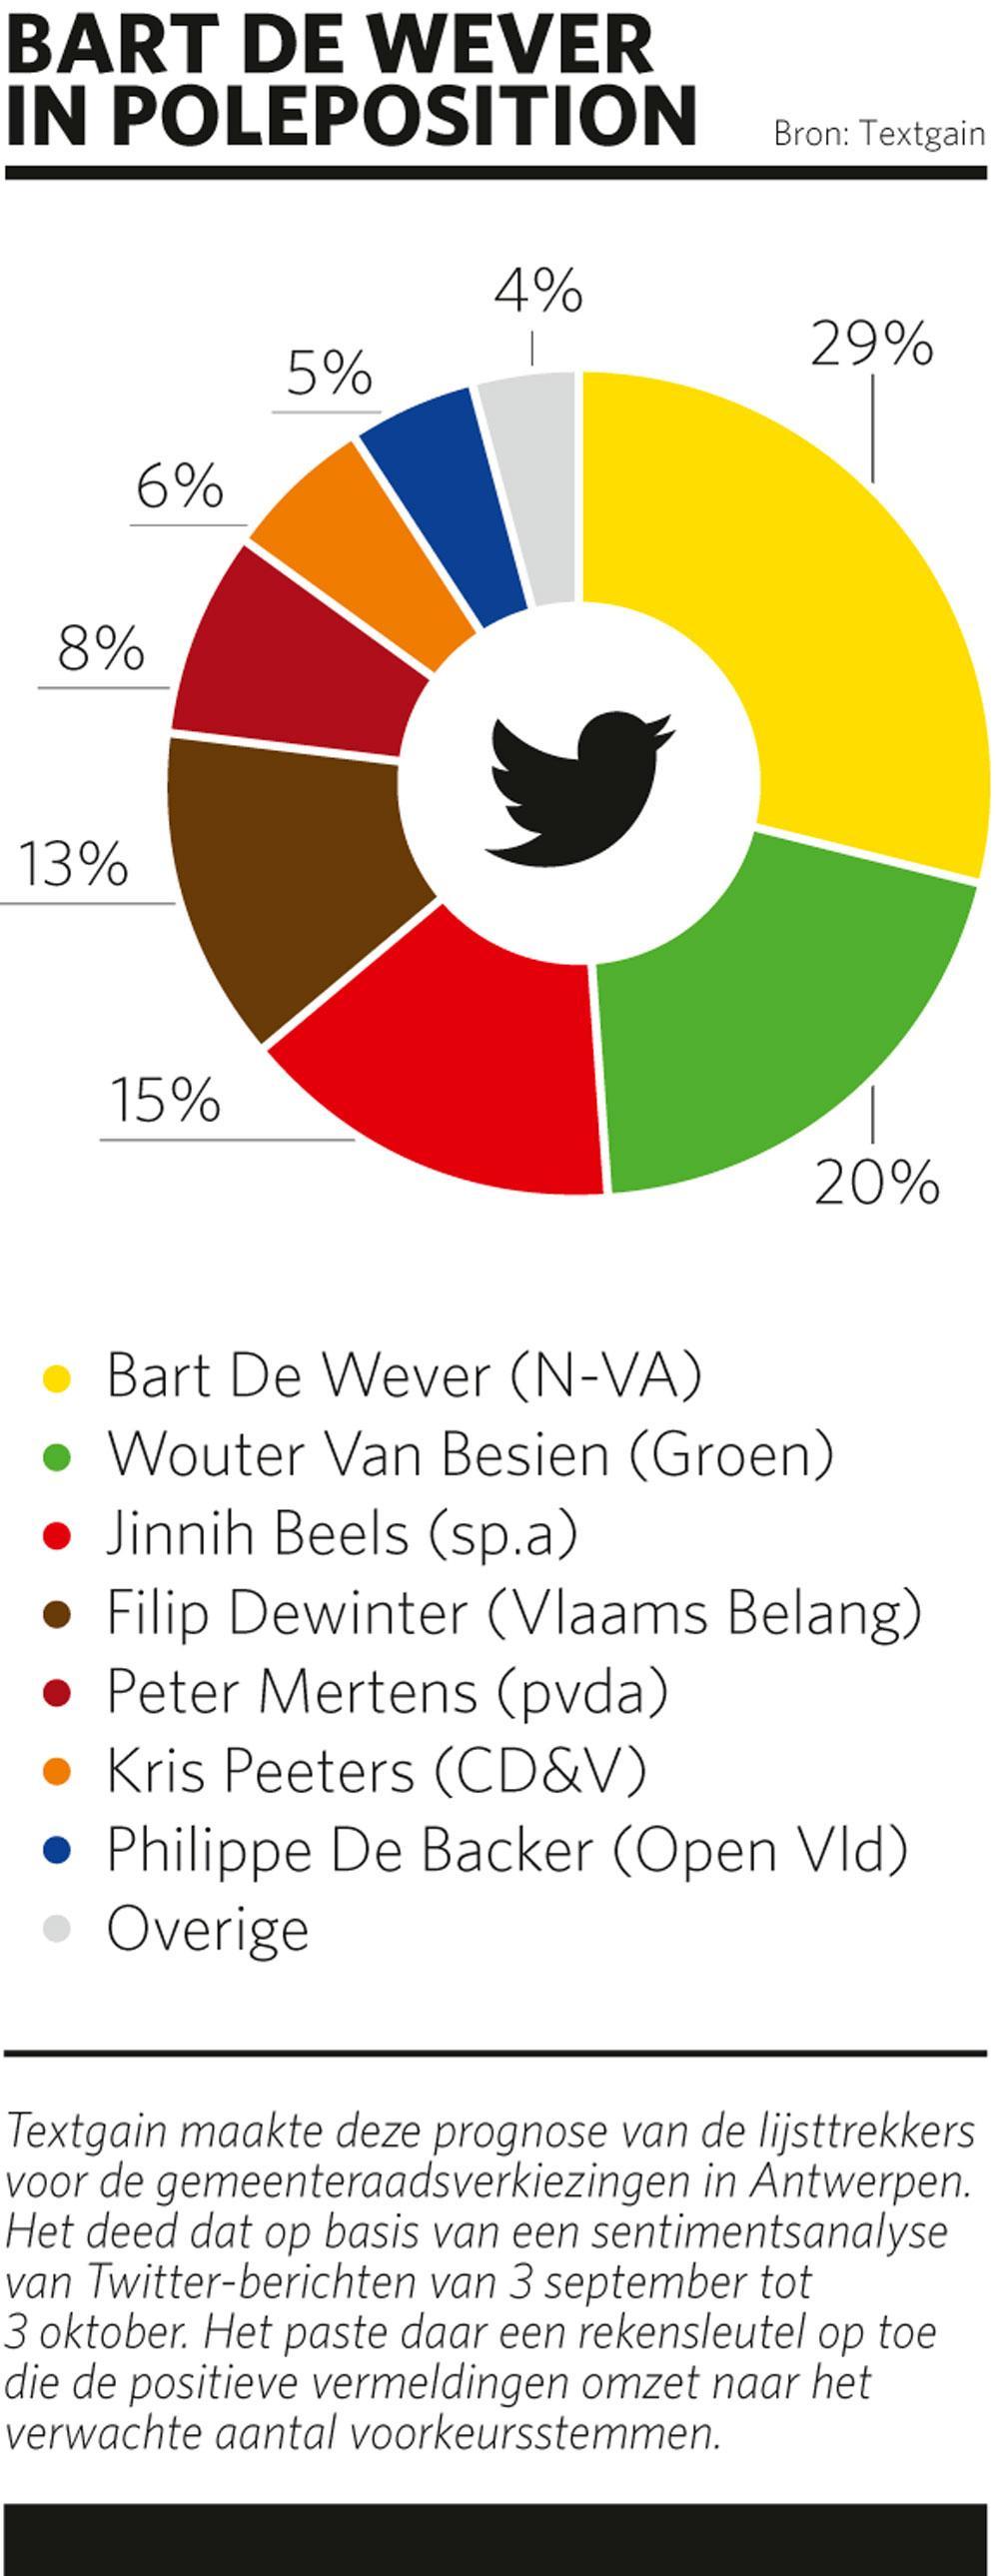 Sentimentsanalyse meet populariteit van politici: Bart De Wever in poleposition